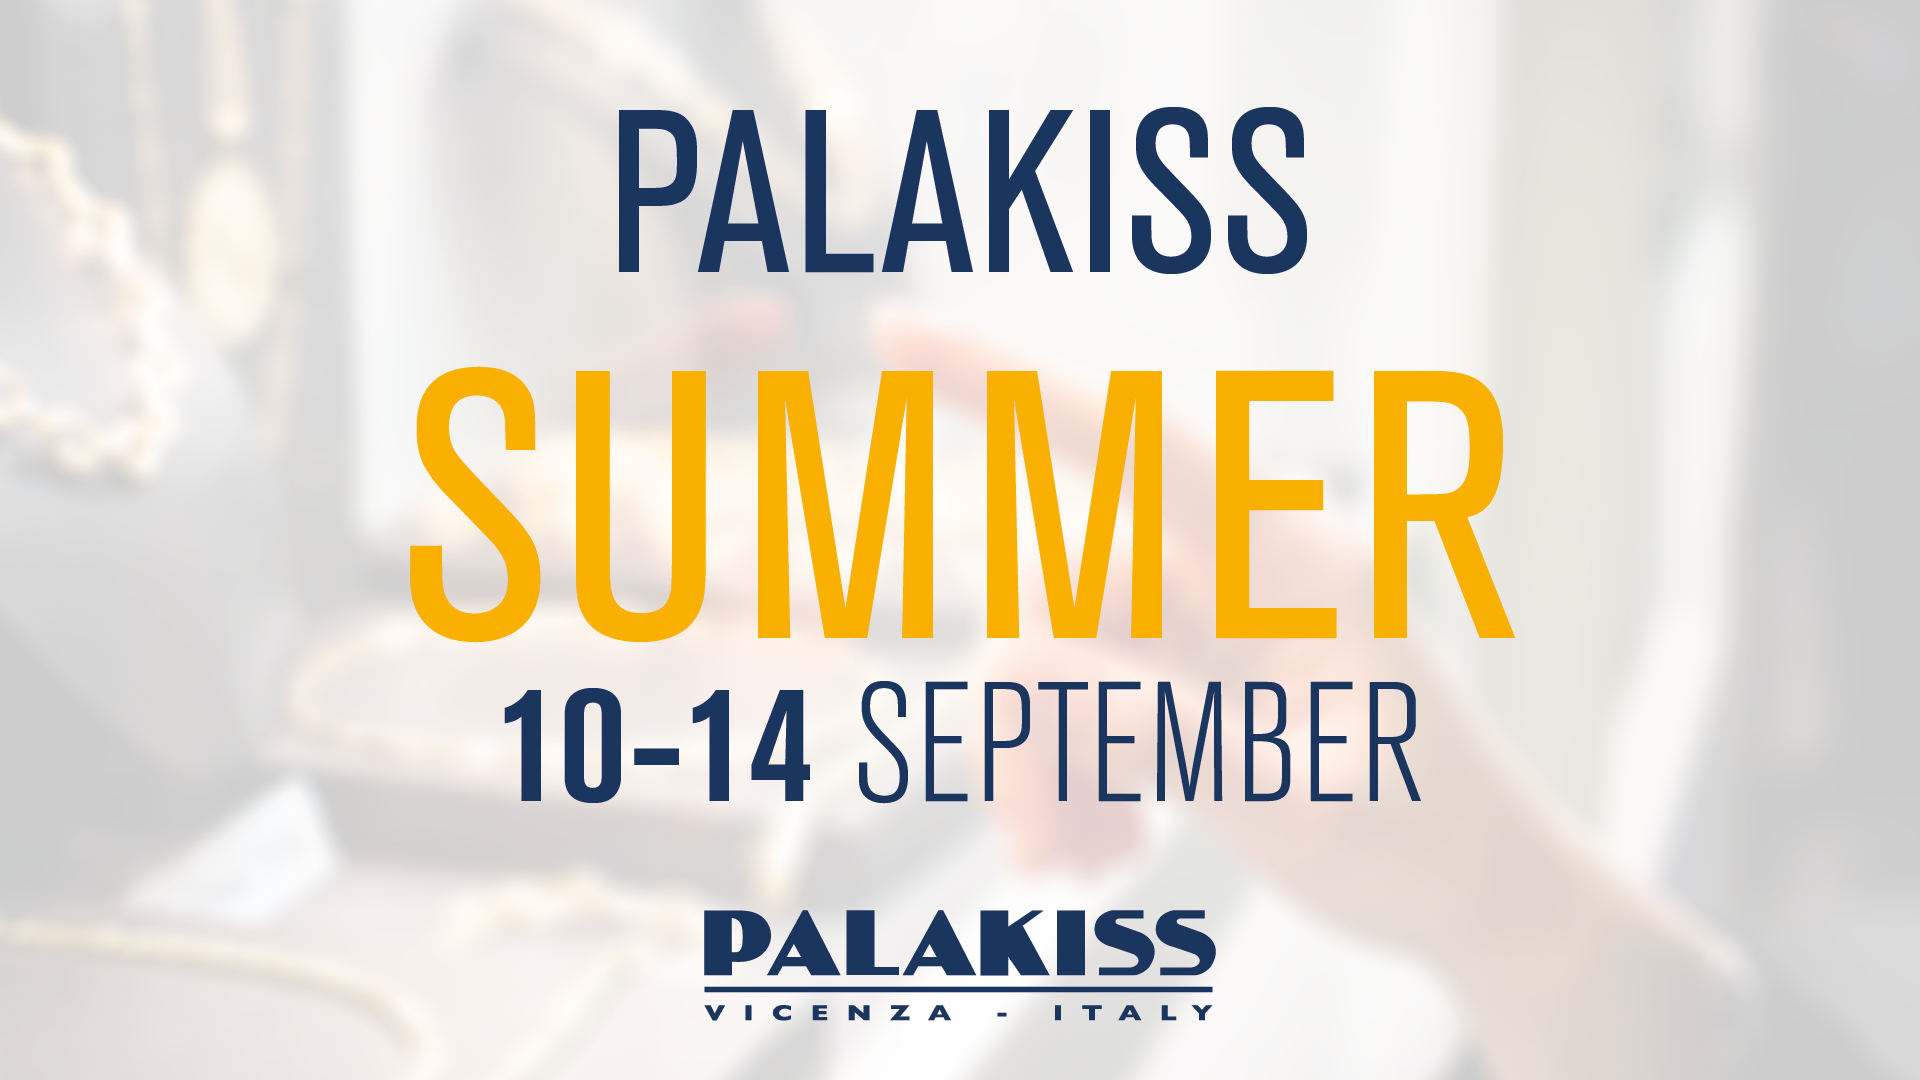 Palakiss Business Center